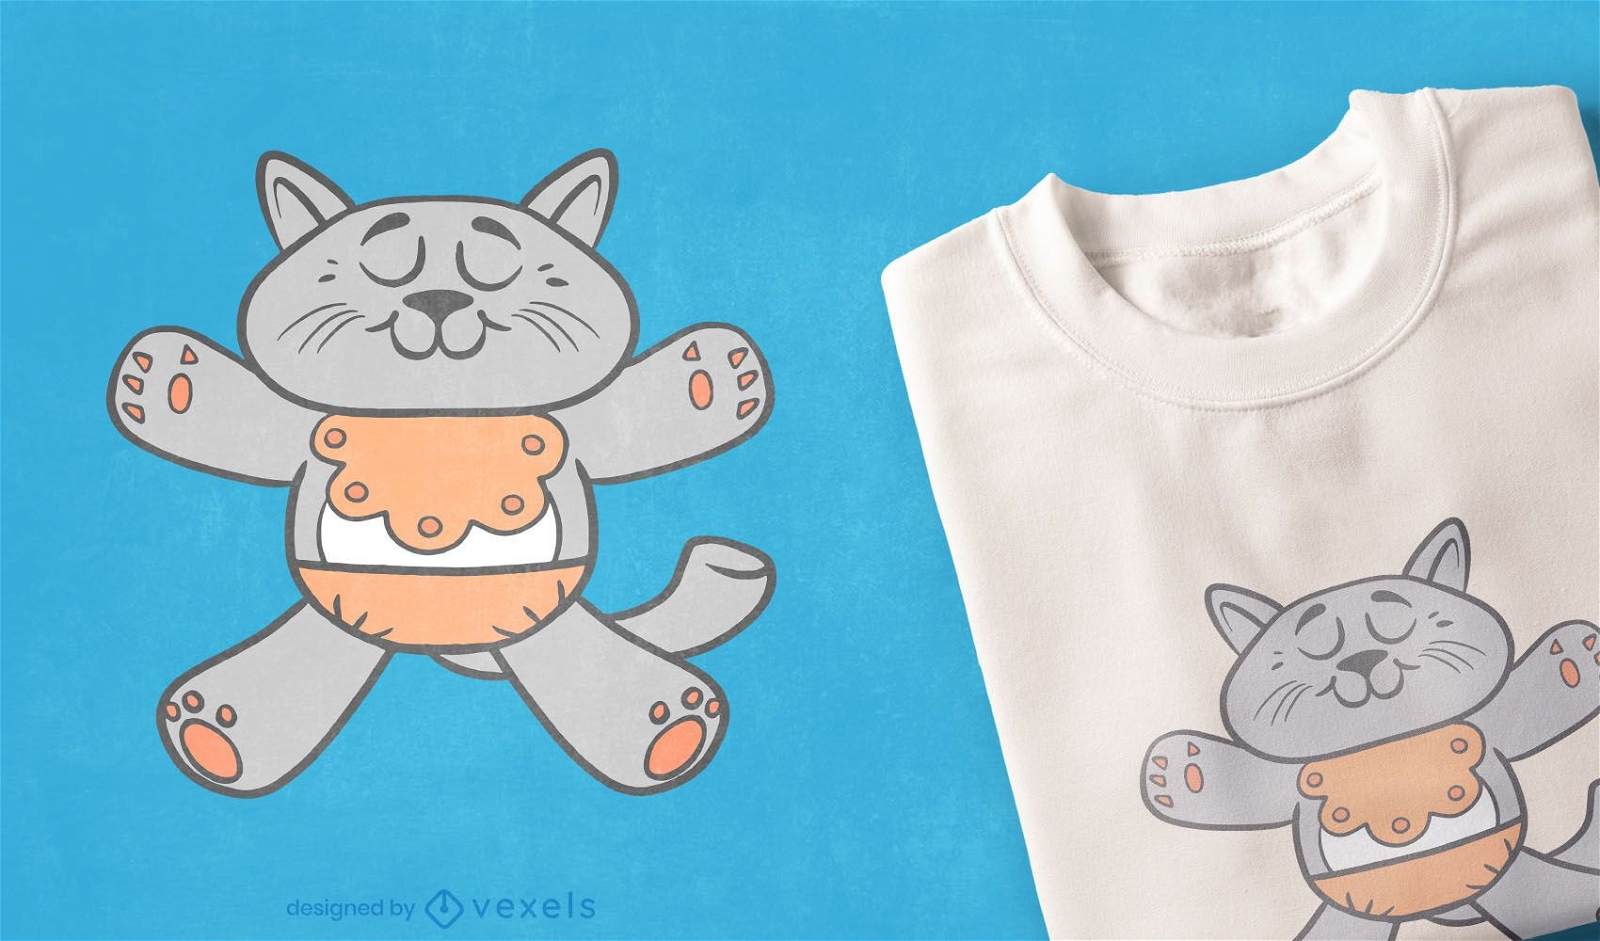 Cat baby t-shirt design